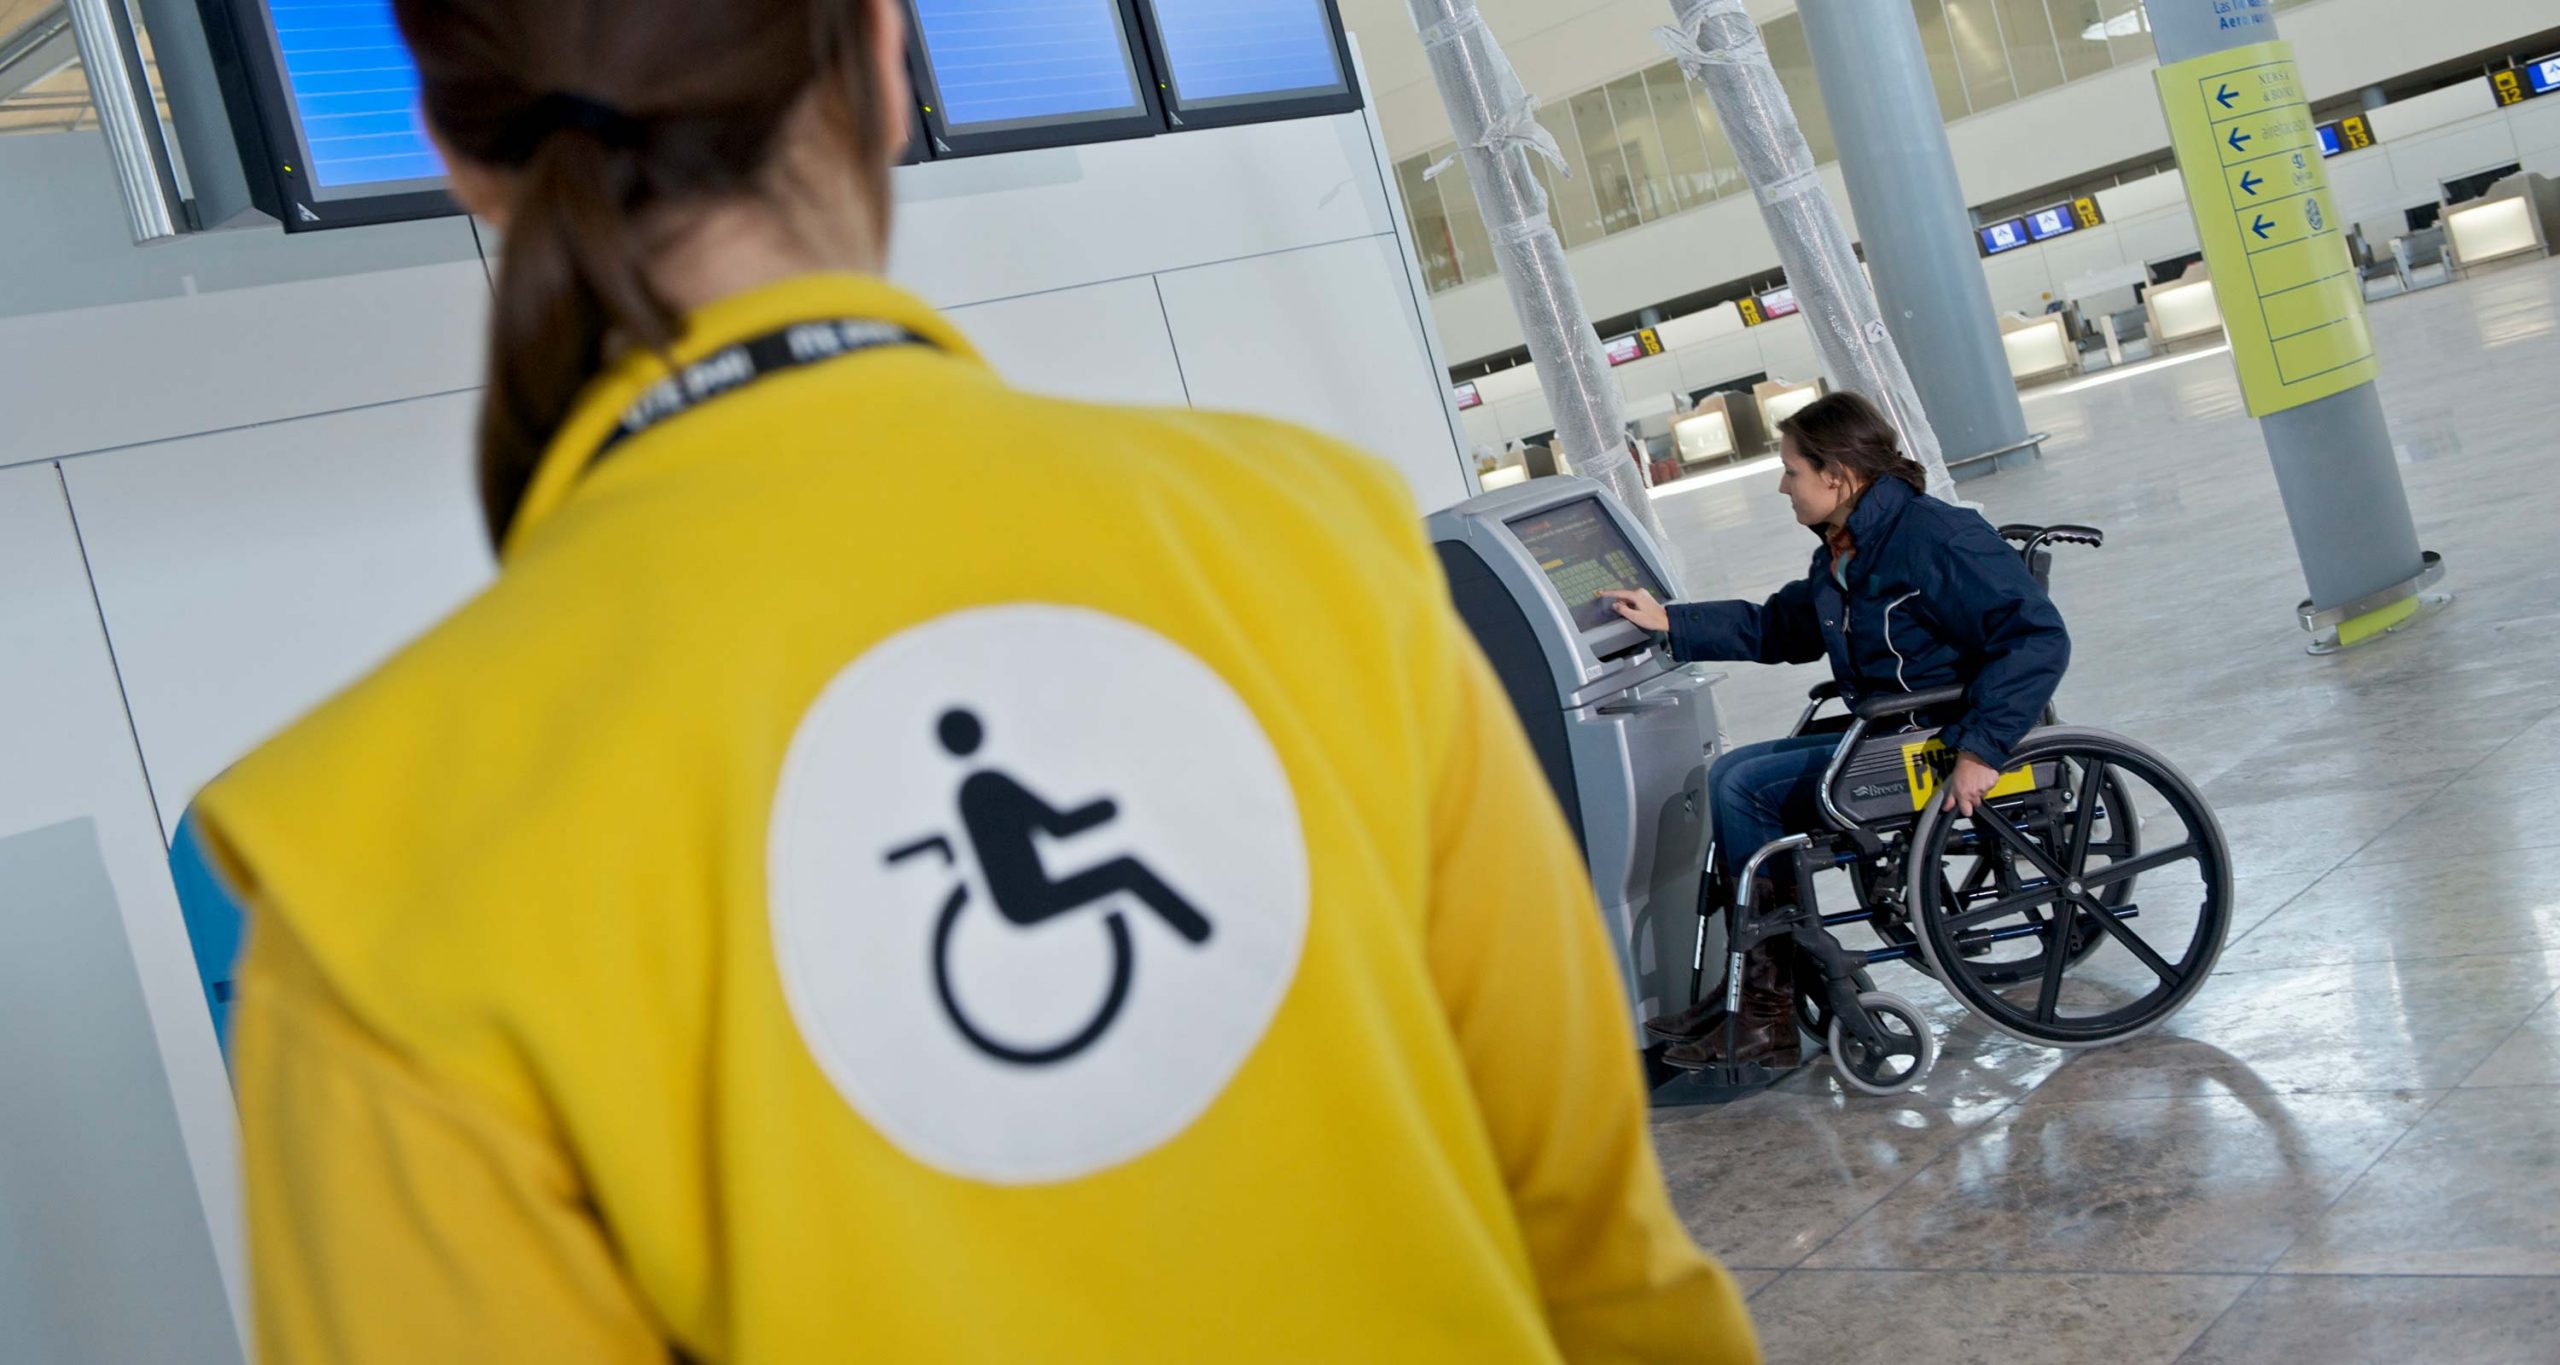 Транспортная доступность для инвалидов. Транспорт для инвалидов. Доступность для инвалидов. Маломобильные в аэропорту. Транспорт для инвалидов колясочников.